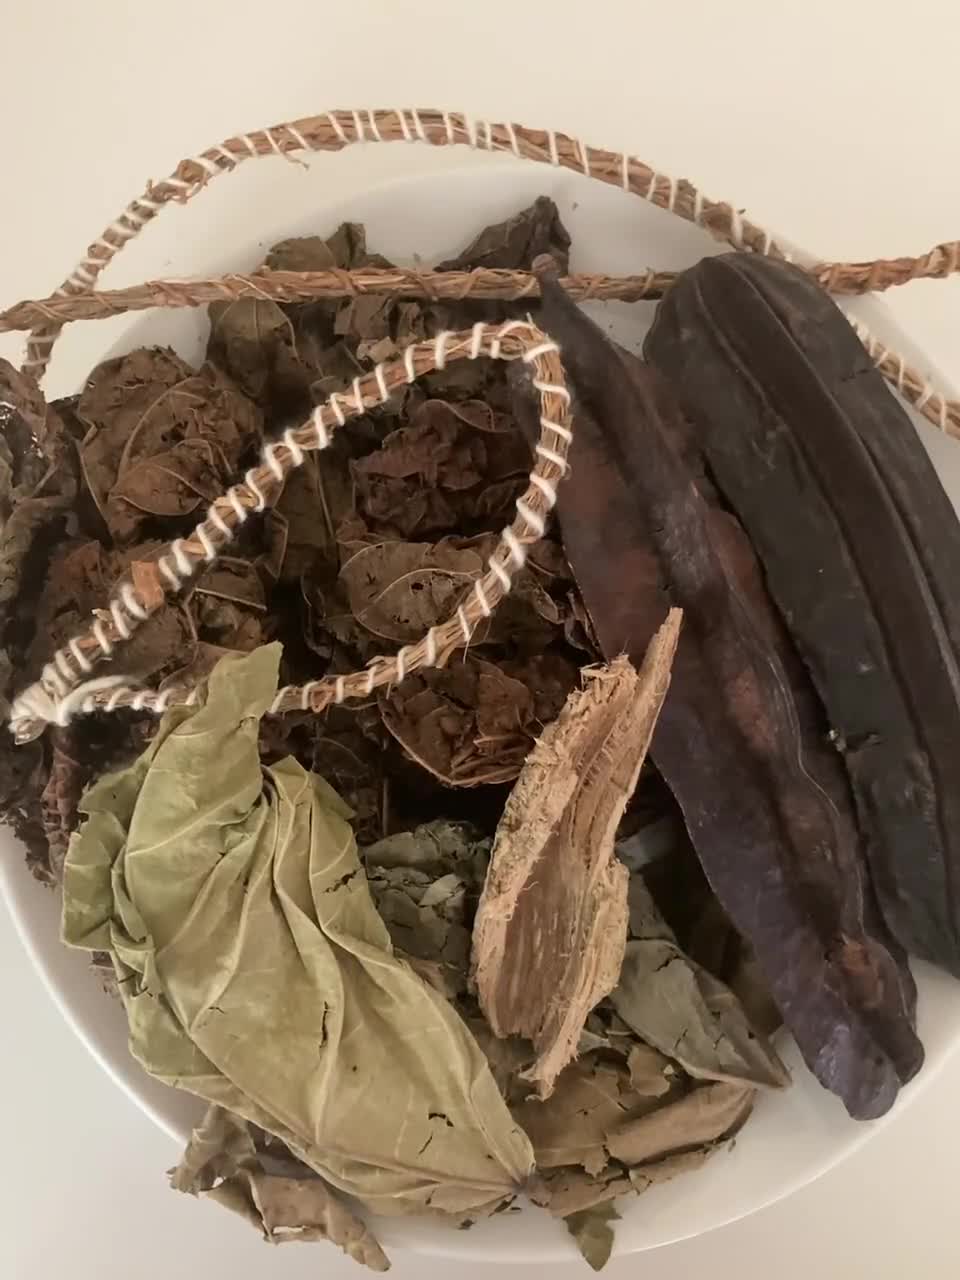 GONGOLI - DJEKA- CLOU DE CLROFLE - Spices, Plants, Roots and Powders mixed